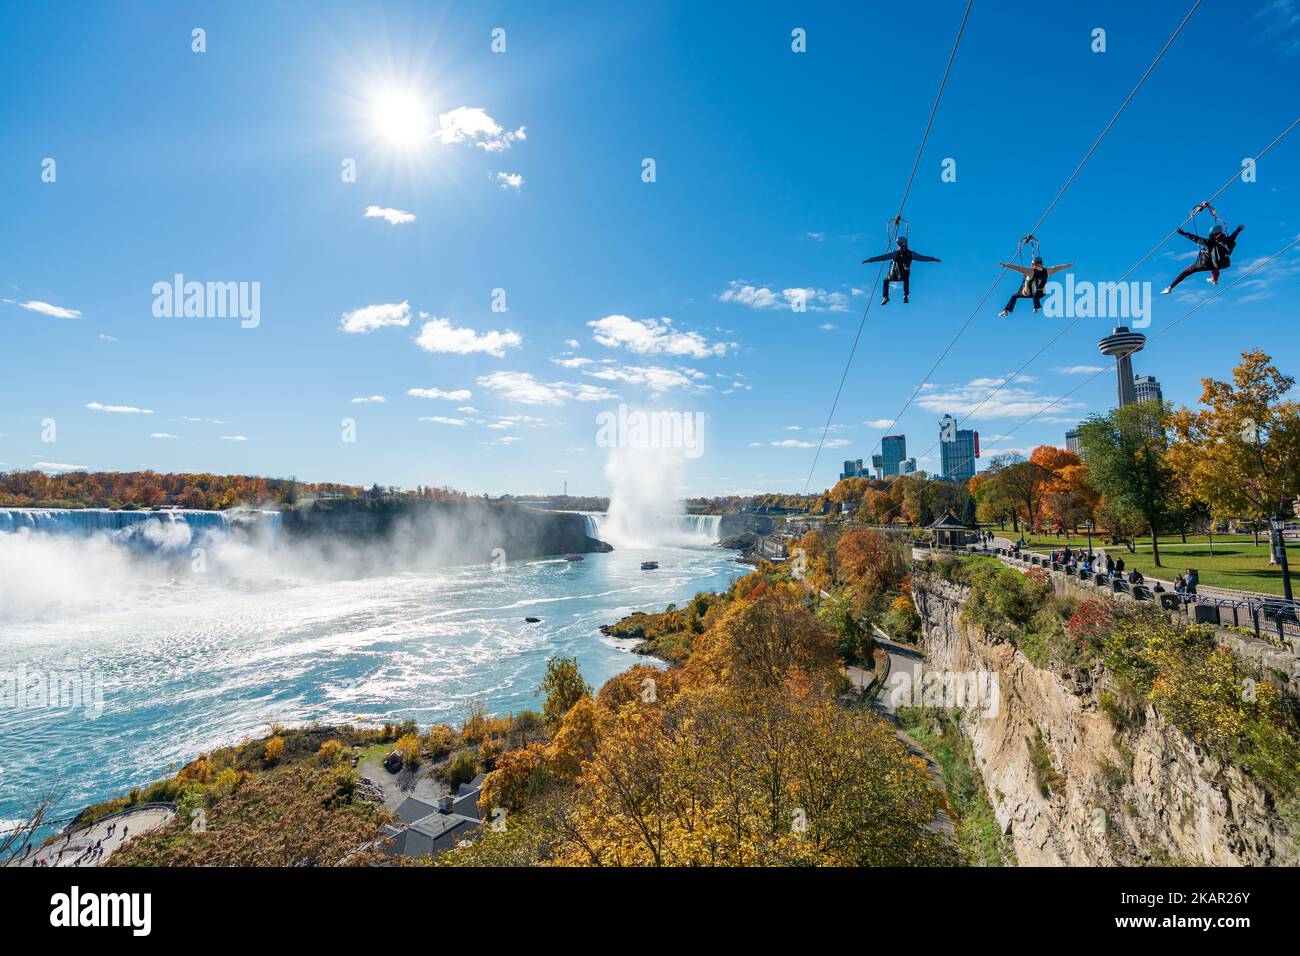 People using the Niagara Falls Zipline ride attraction. Niagara Falls City Red maple leaf during autumn foliage. Ontario, Canada. Stock Photo